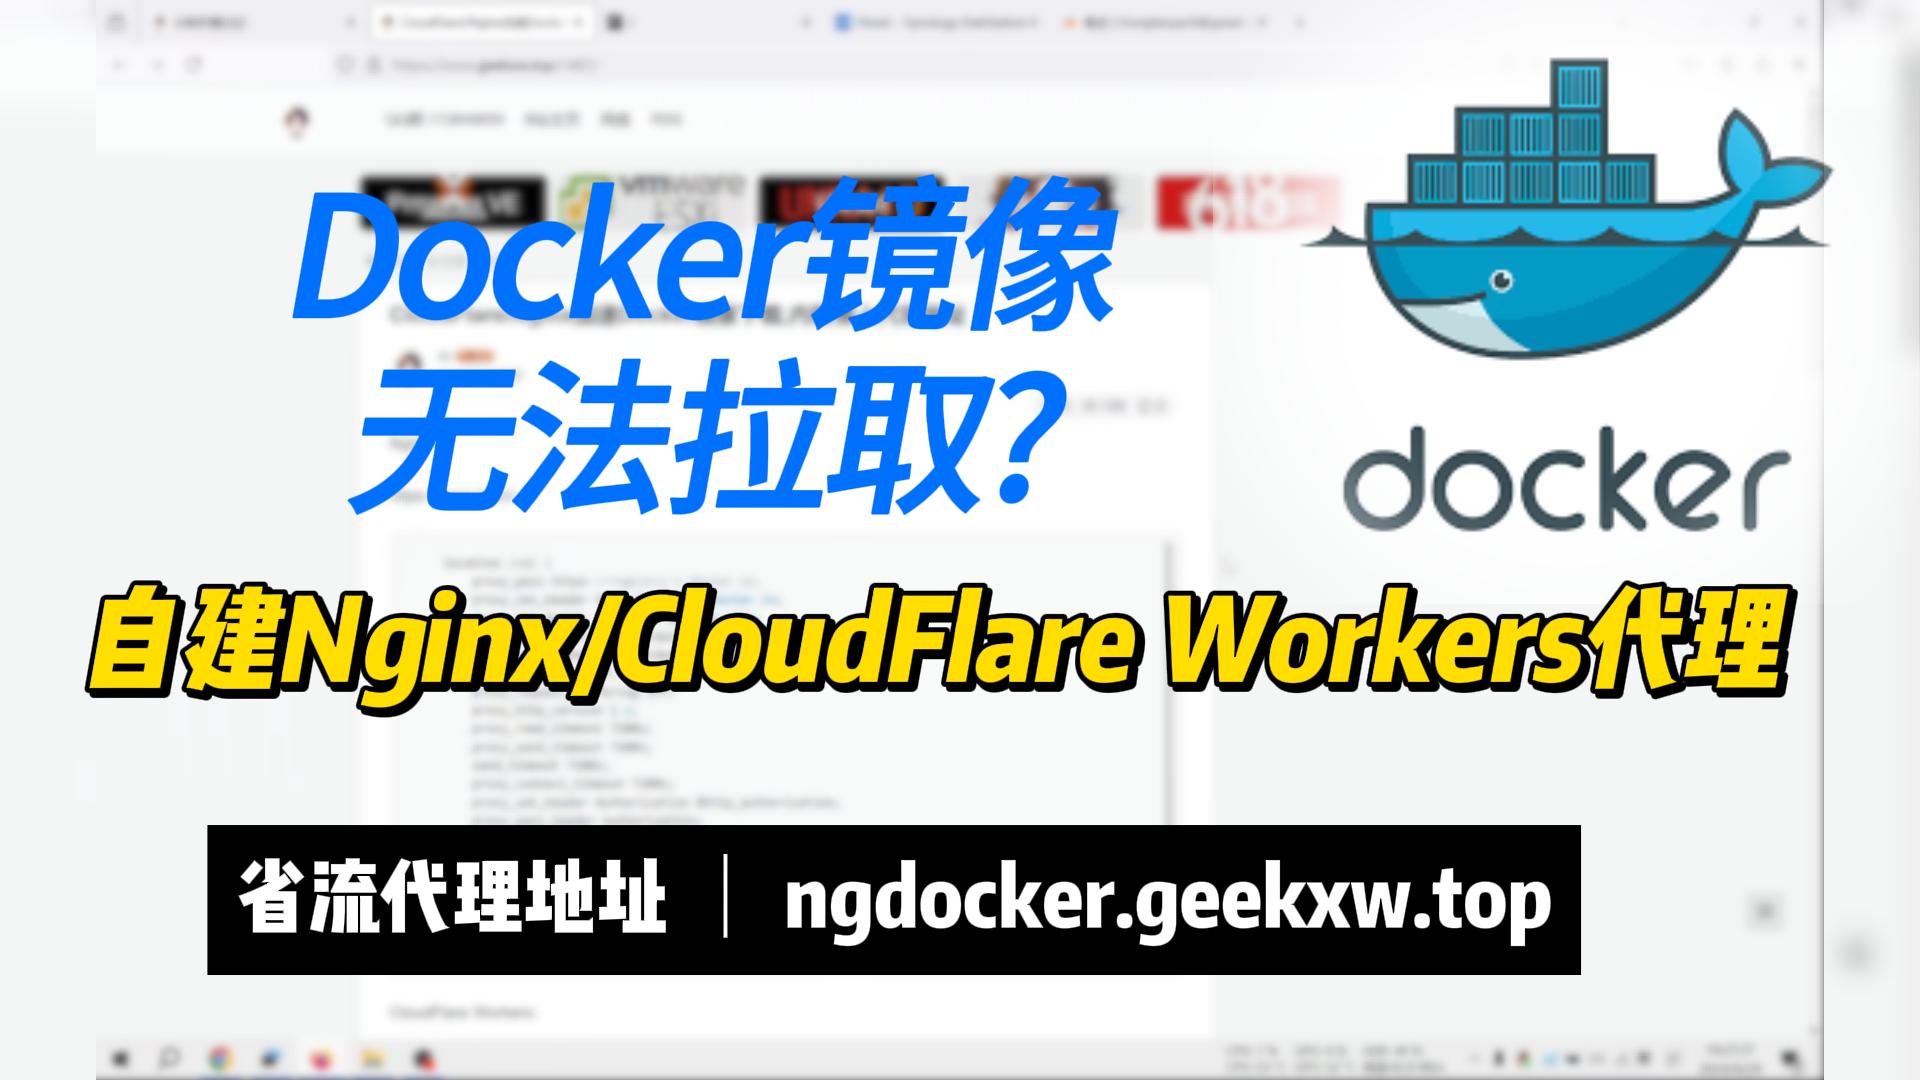 CloudFlare Workers/Nginx加速Docker镜像下载,内附懒人代理地址-小陈折腾日记